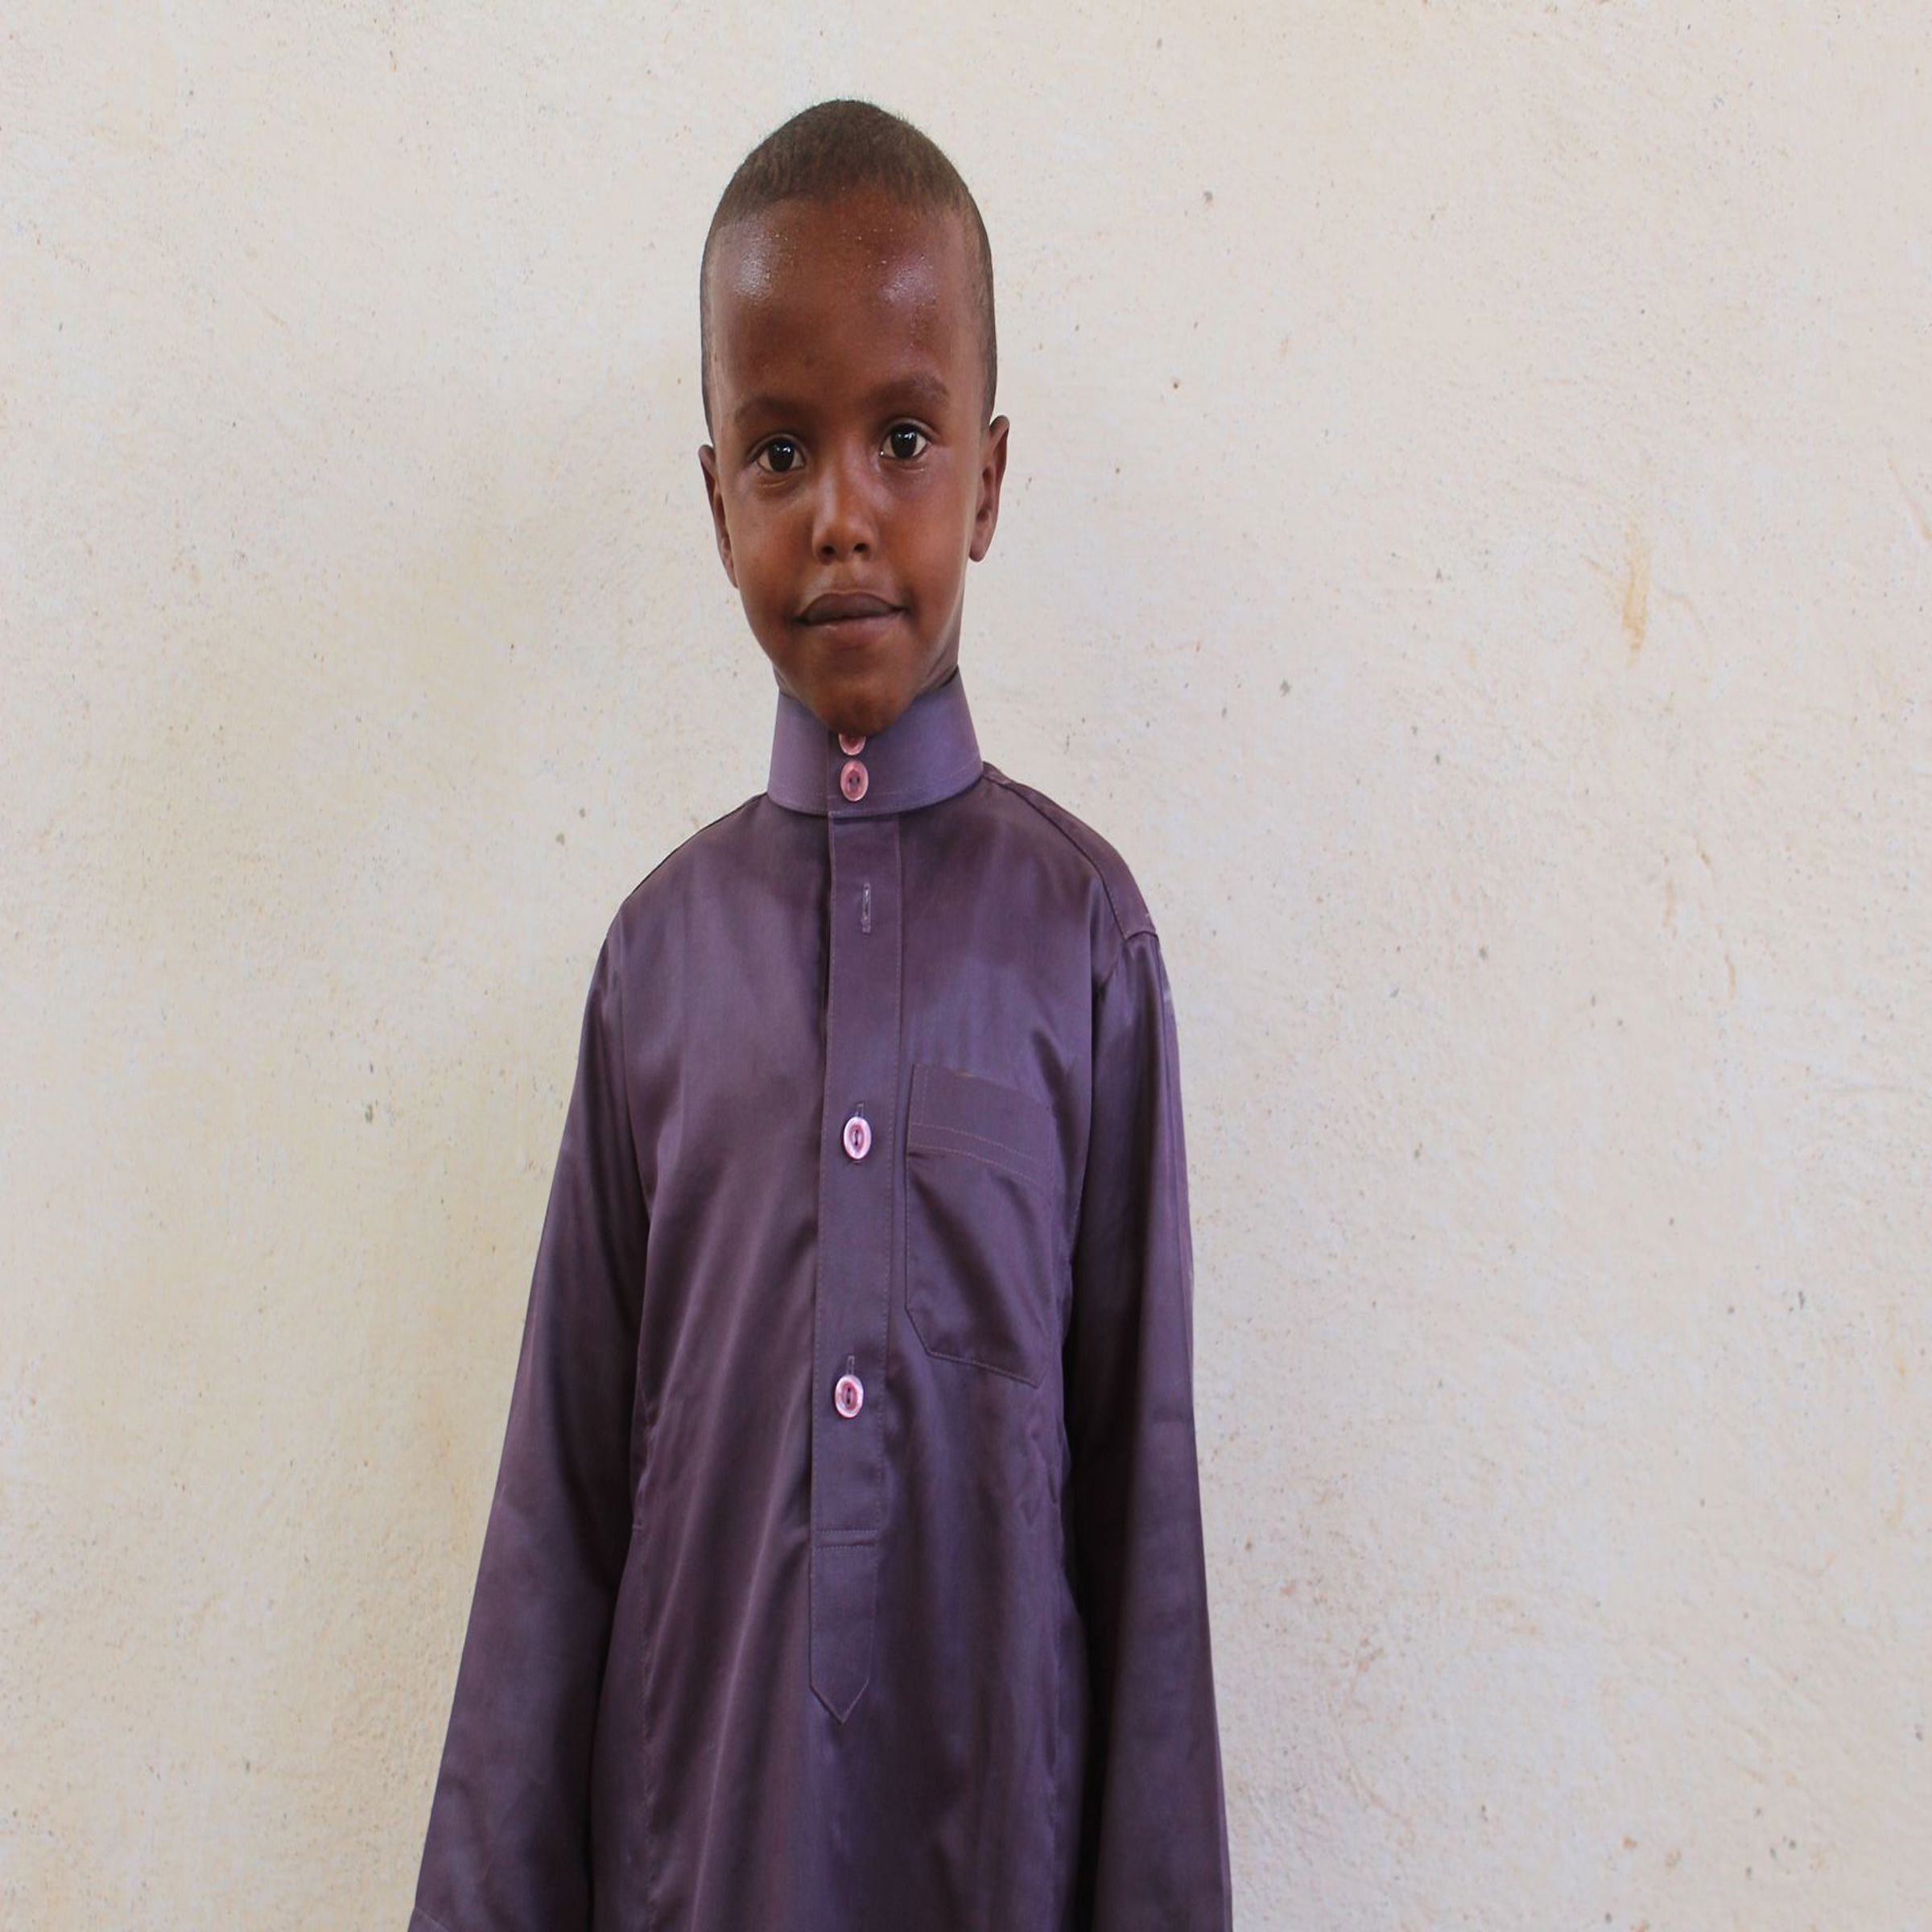 Human Appeal Orphan - Zakariye Abdikarim